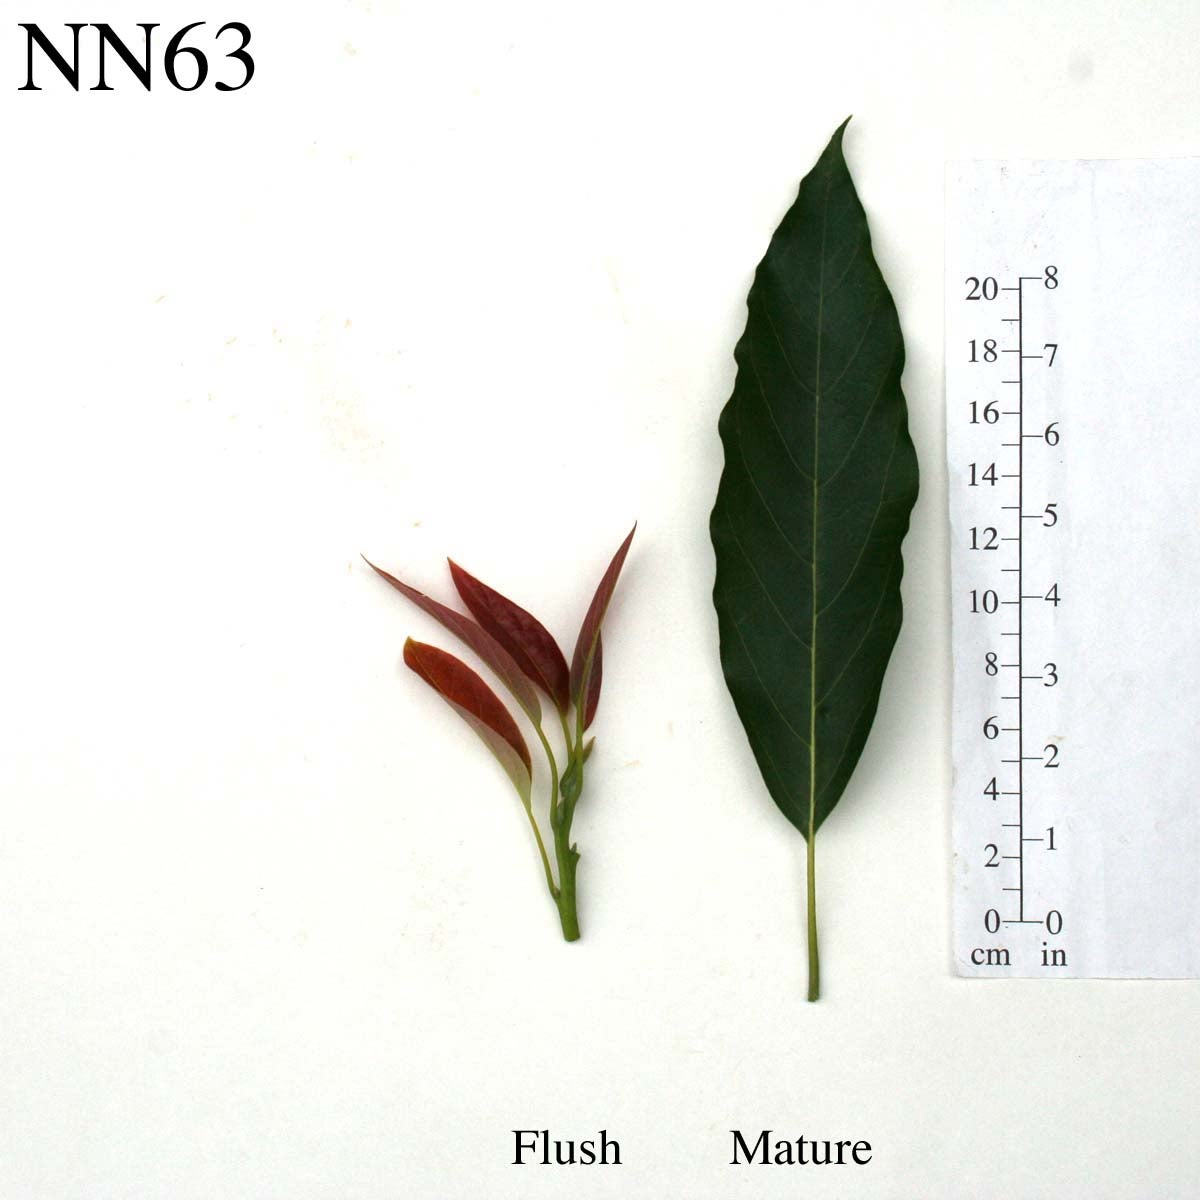 NN63 Leaves